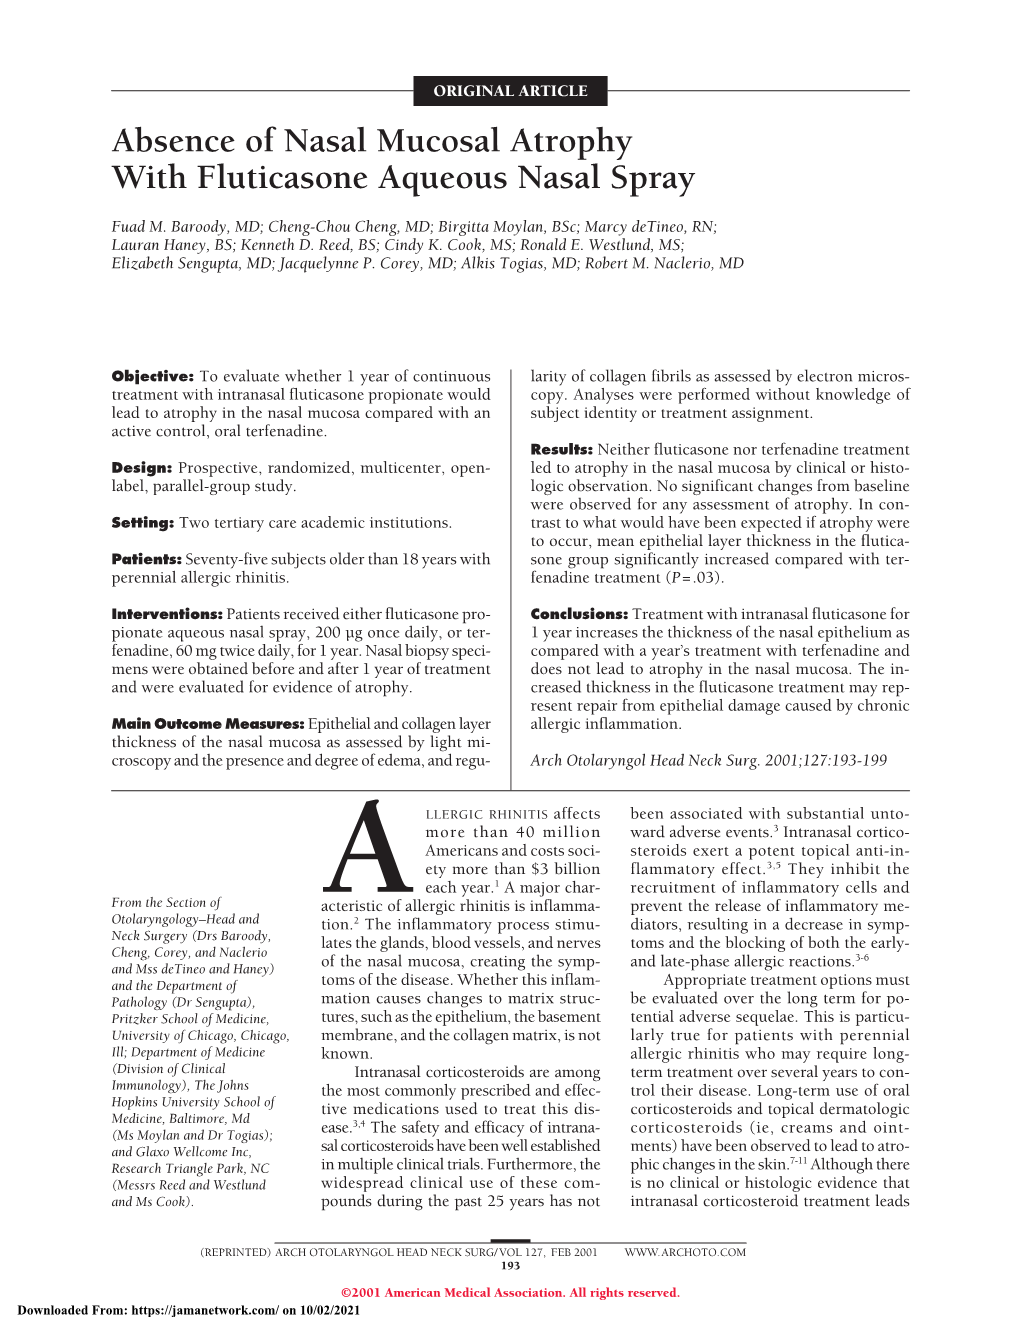 Absence of Nasal Mucosal Atrophy with Fluticasone Aqueous Nasal Spray